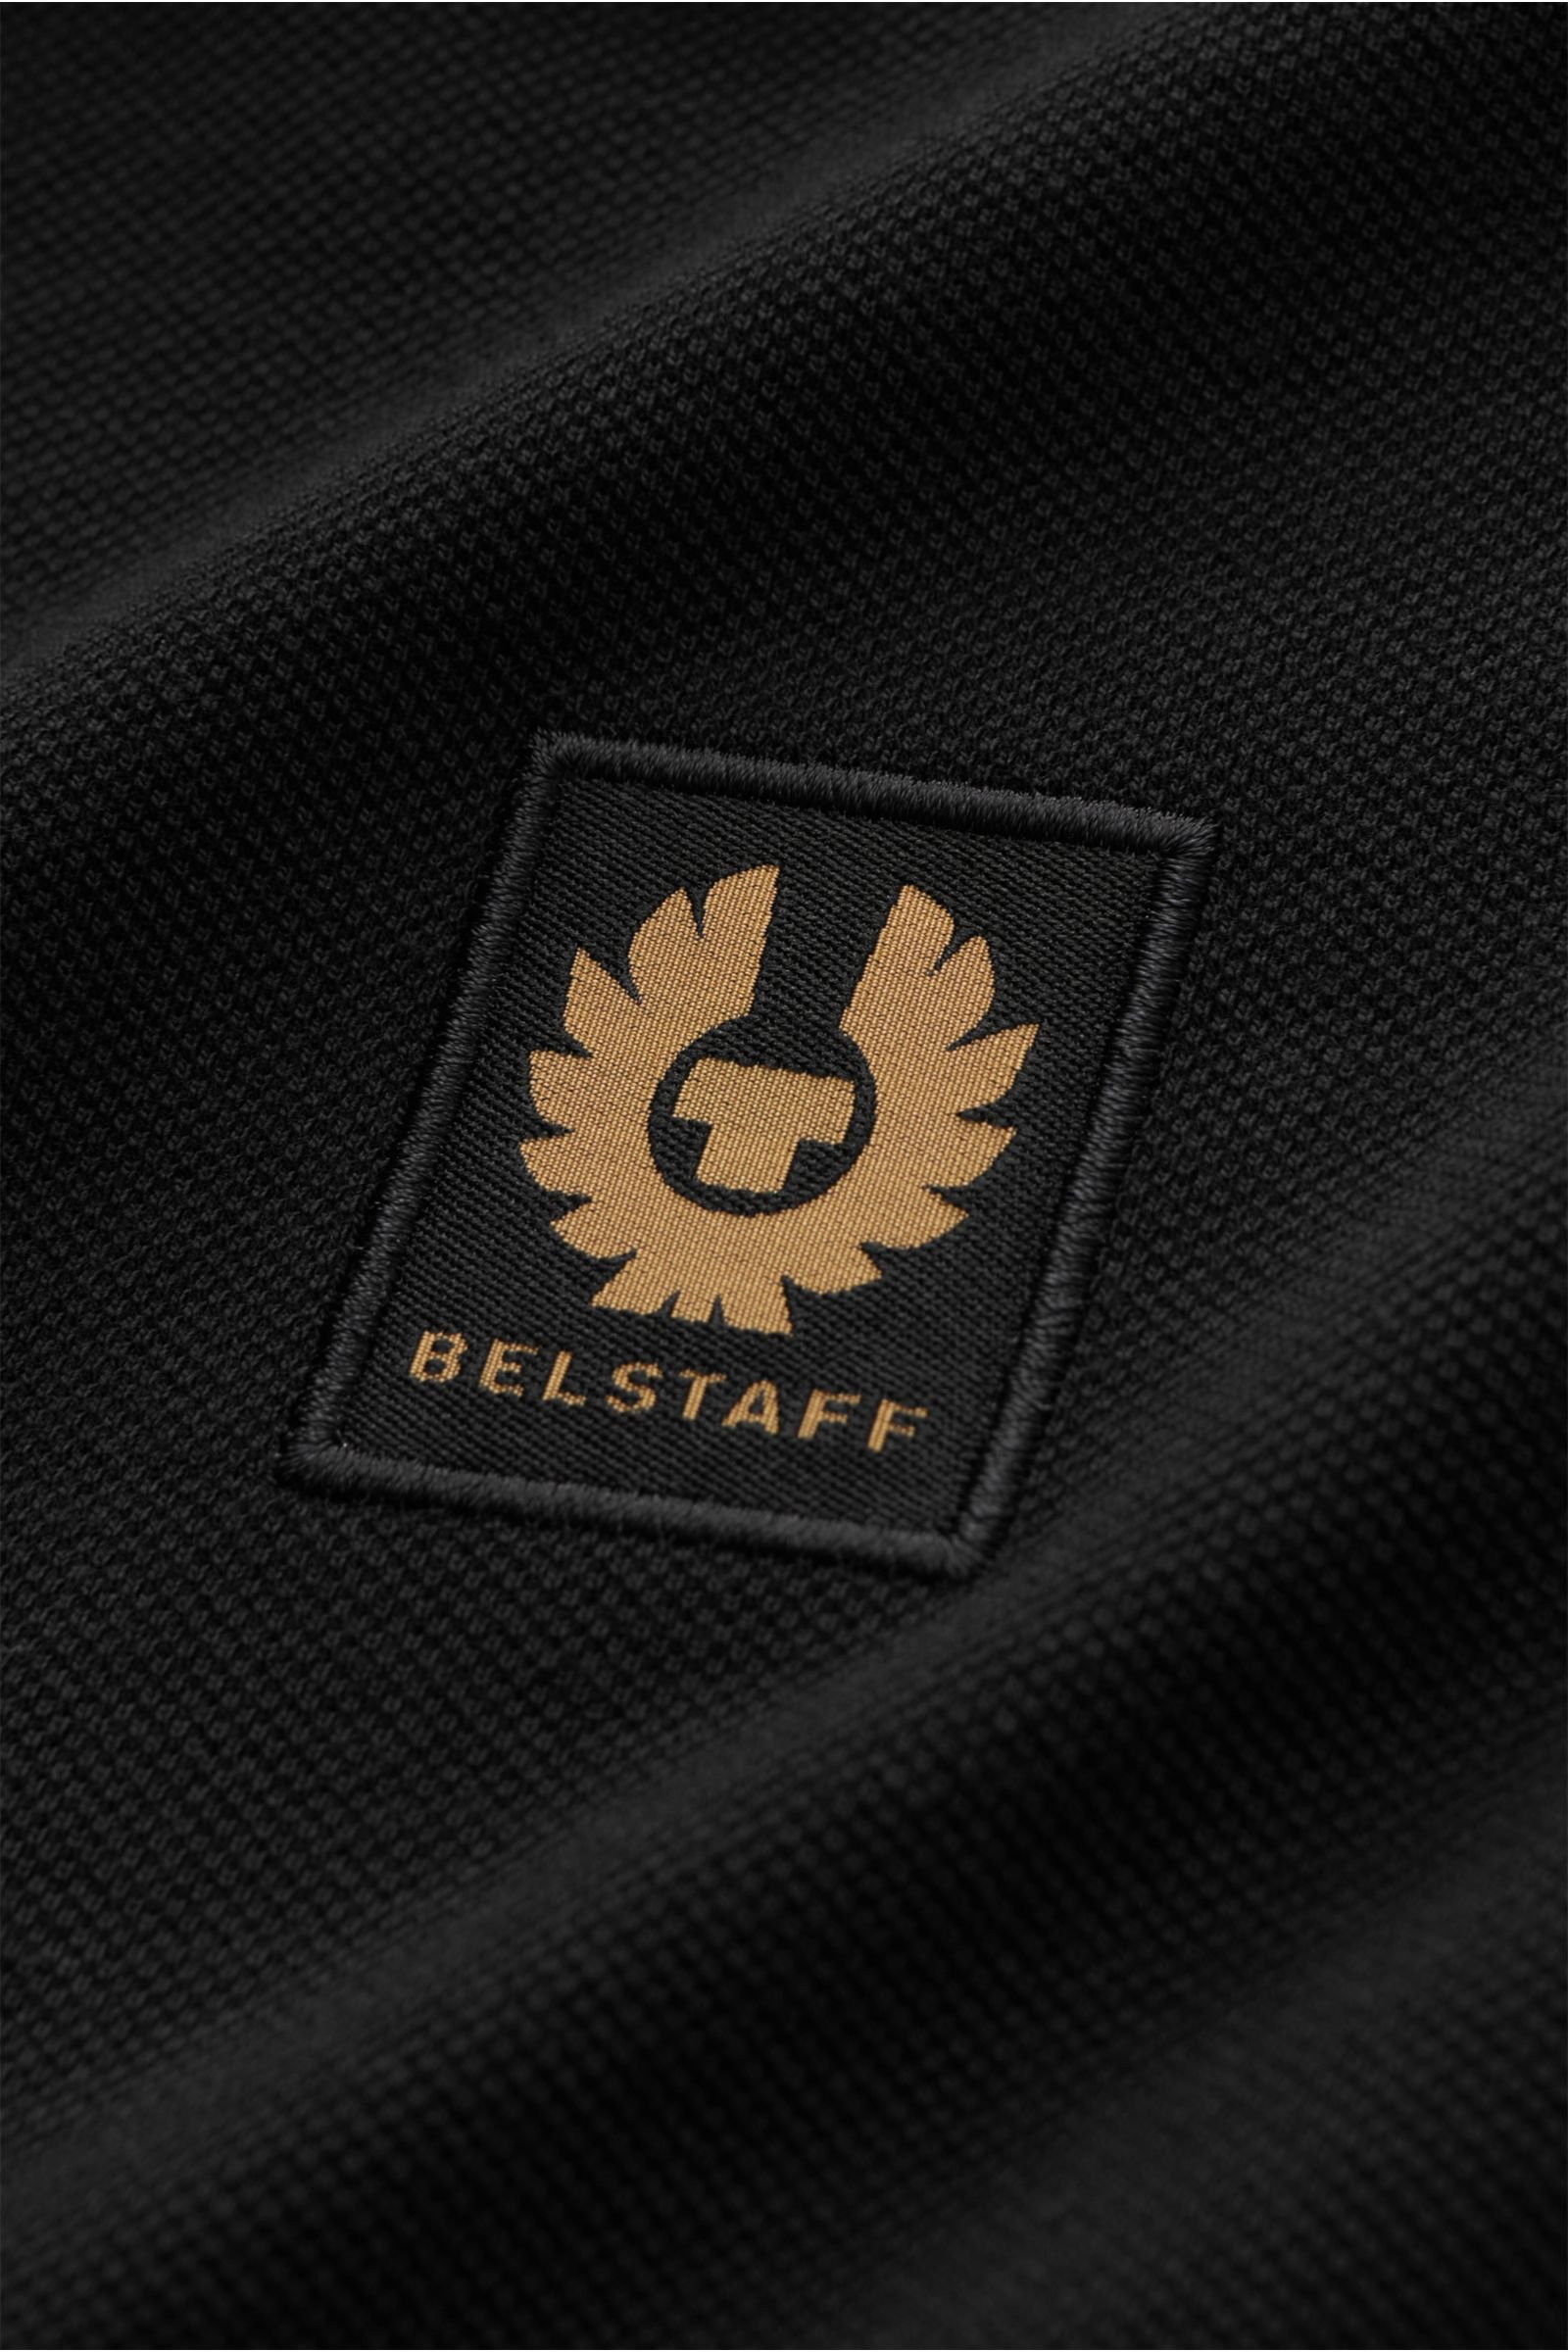 BELSTAFF polo shirt black | BRAUN Hamburg